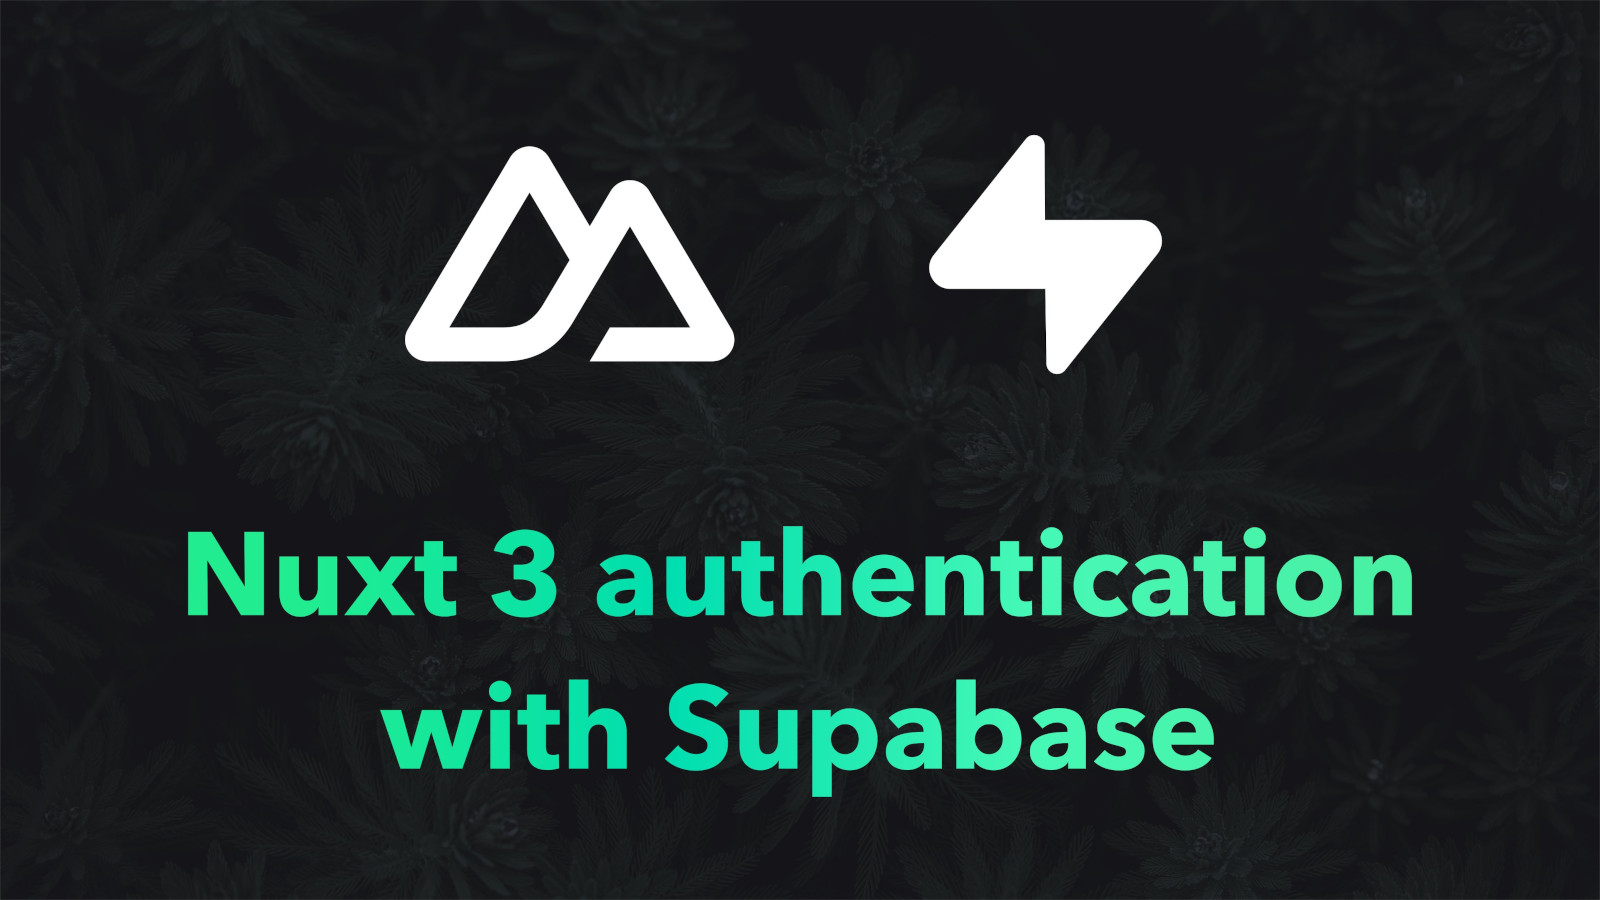 Nuxt 3 authentication with Supabase